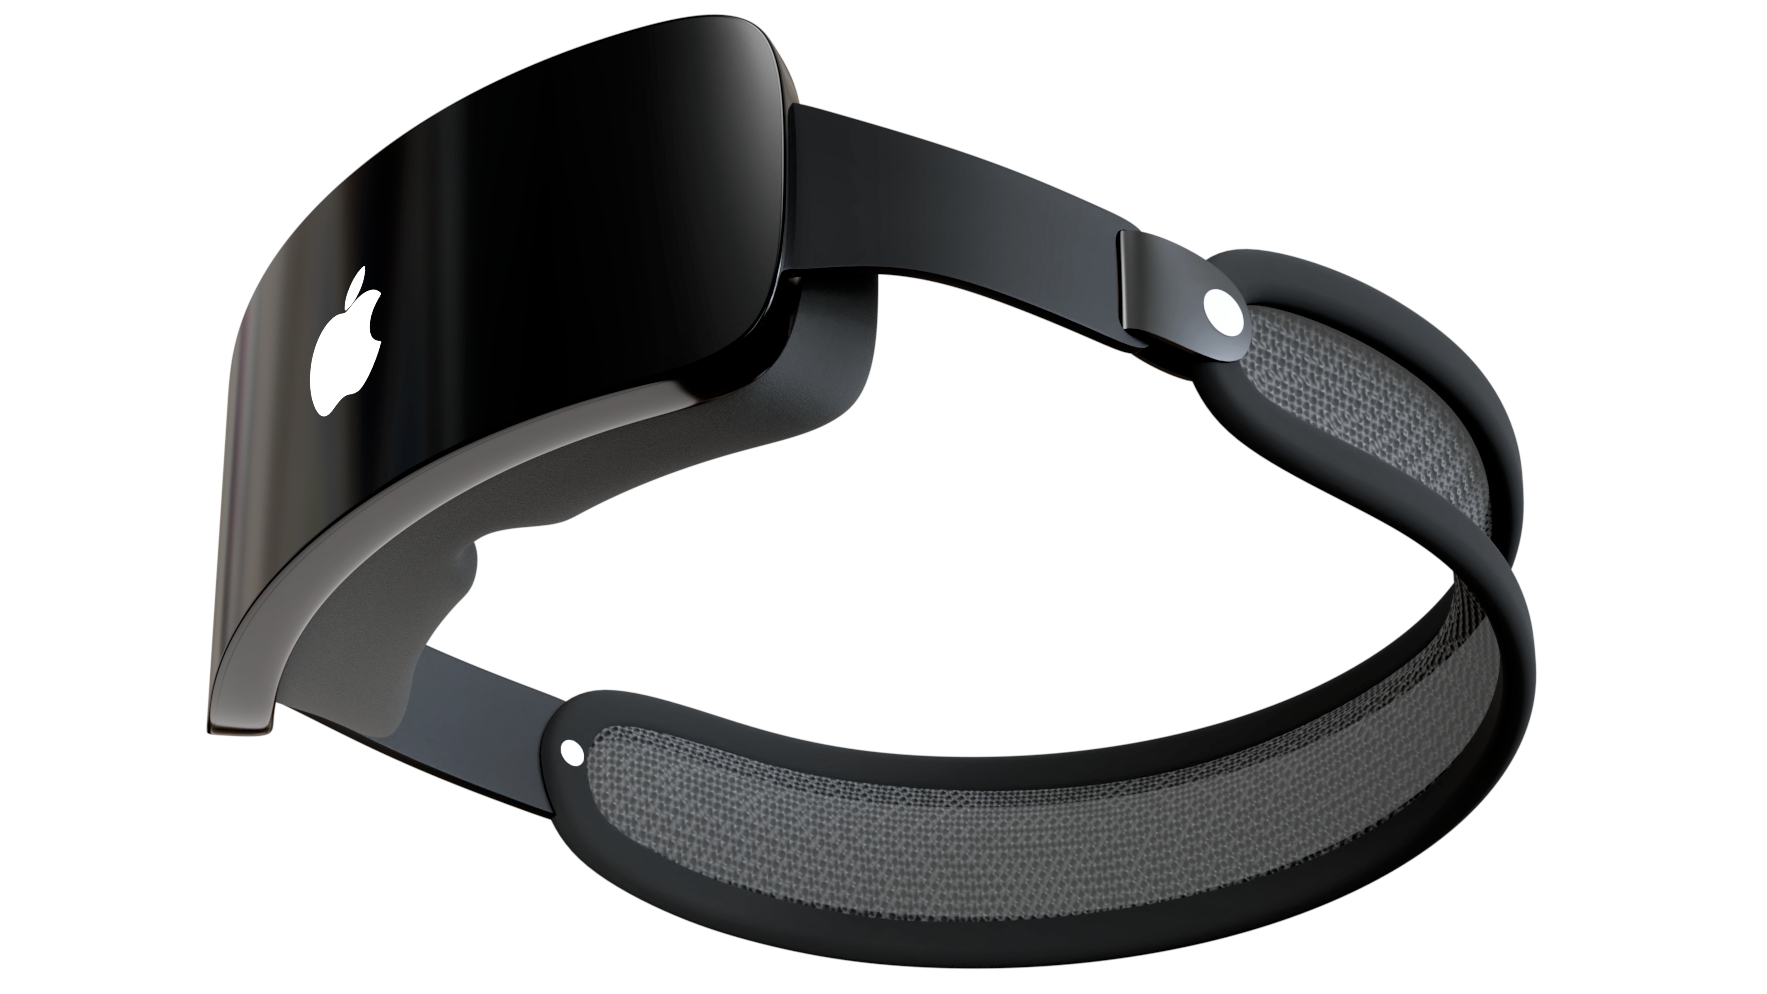 Rendering imagining an Apple headset resembling ski goggles